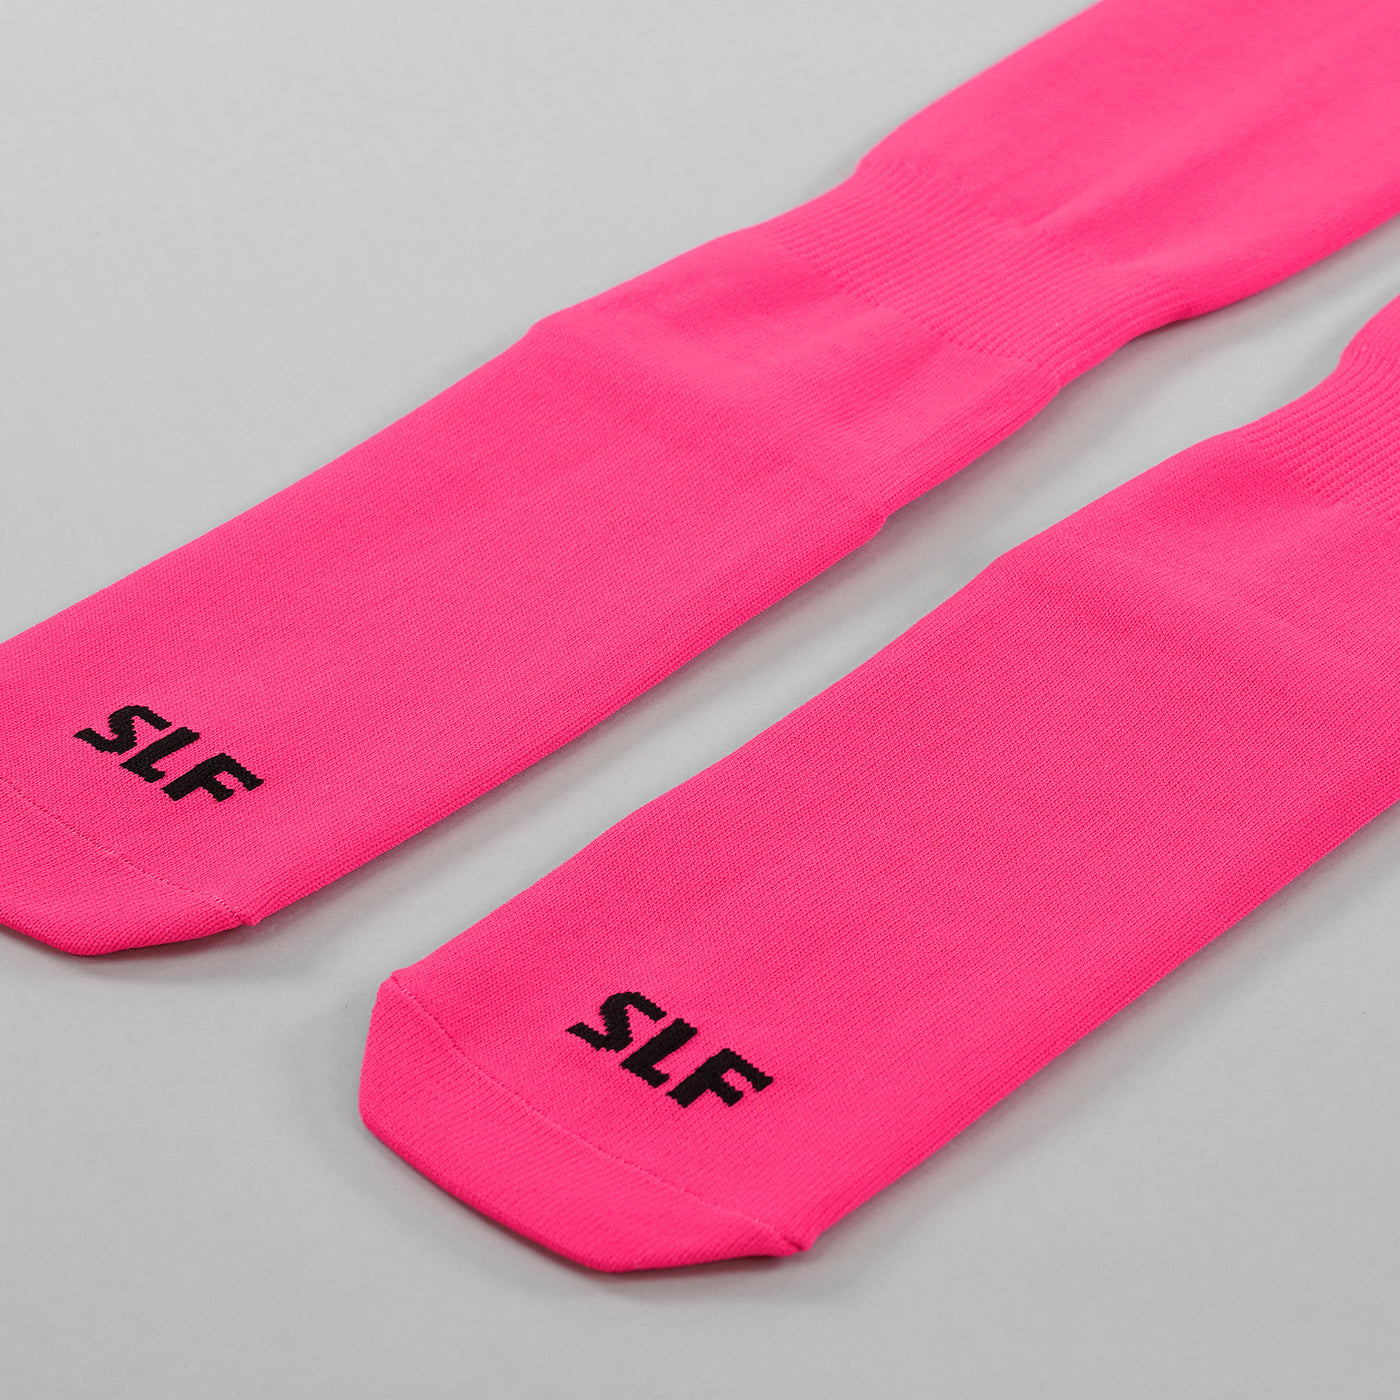 Sleefs Hue Pink Long Scrunchie Socks Adult